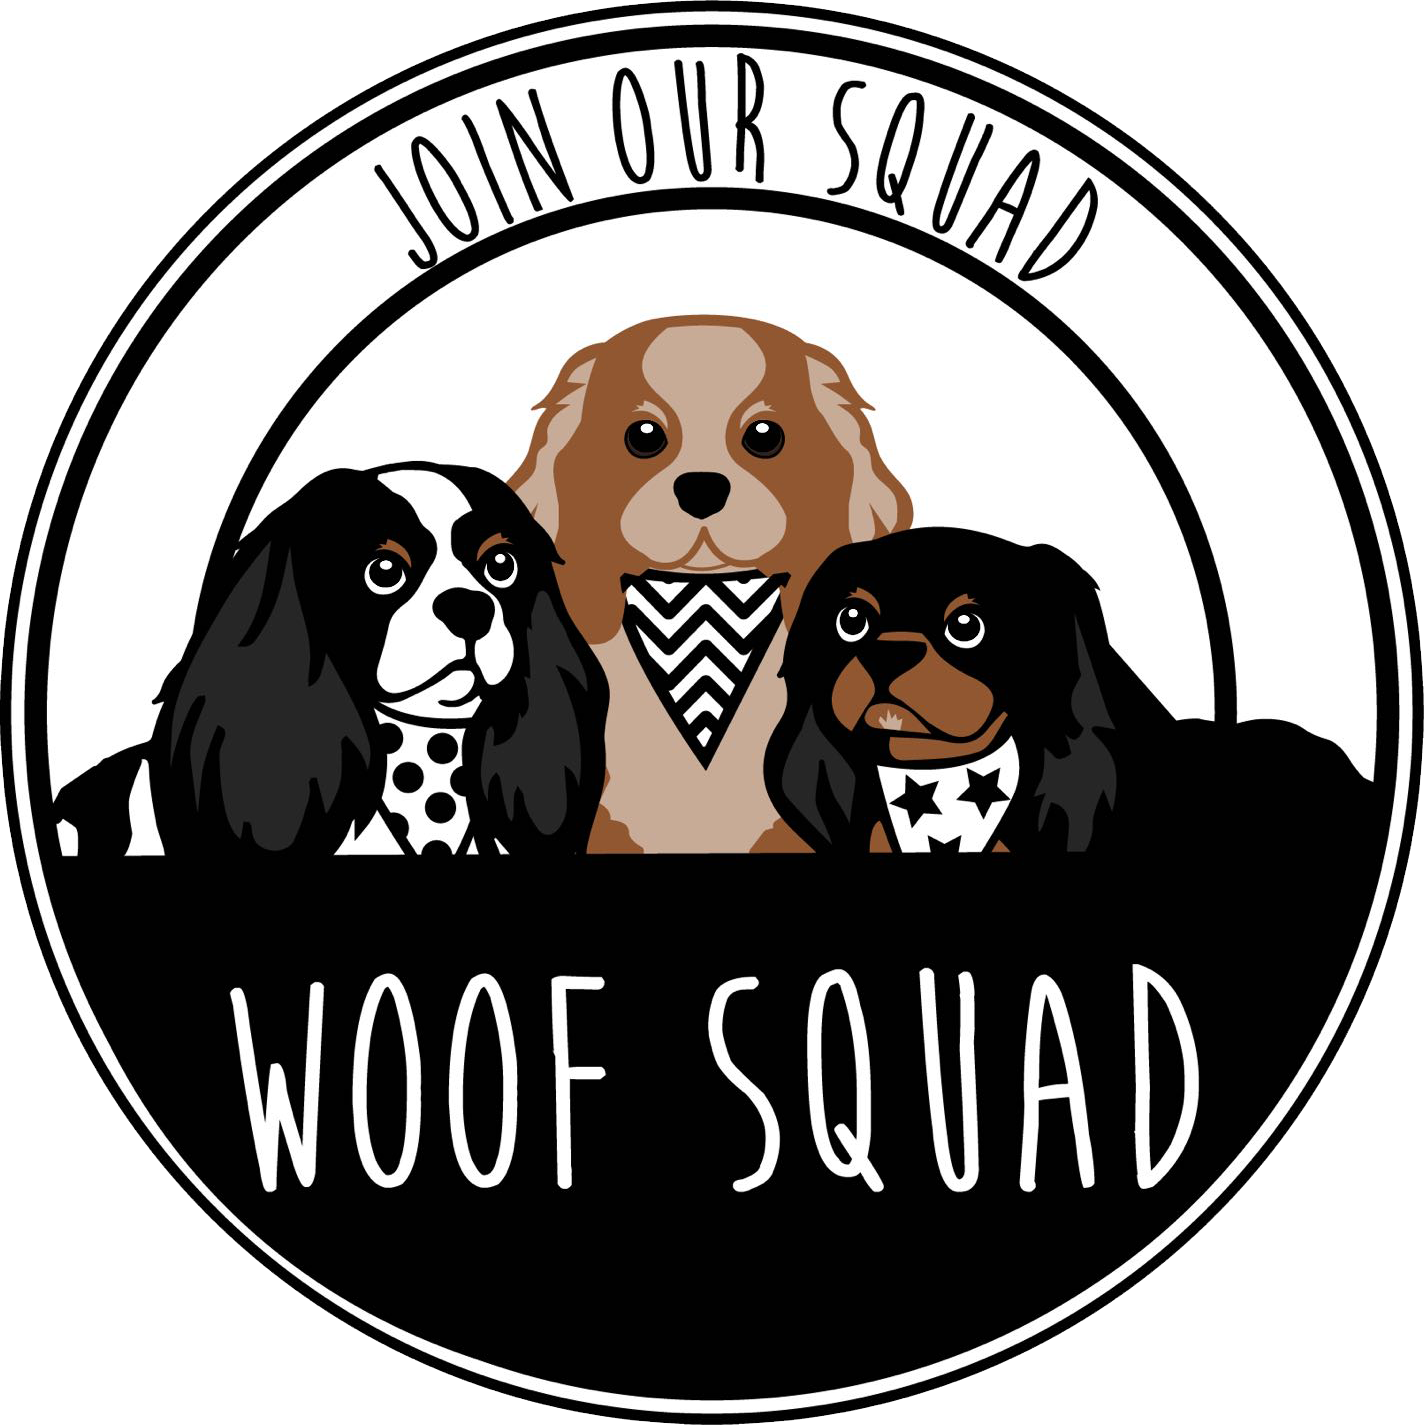 Woof Squad | Dog walking and pet sitting